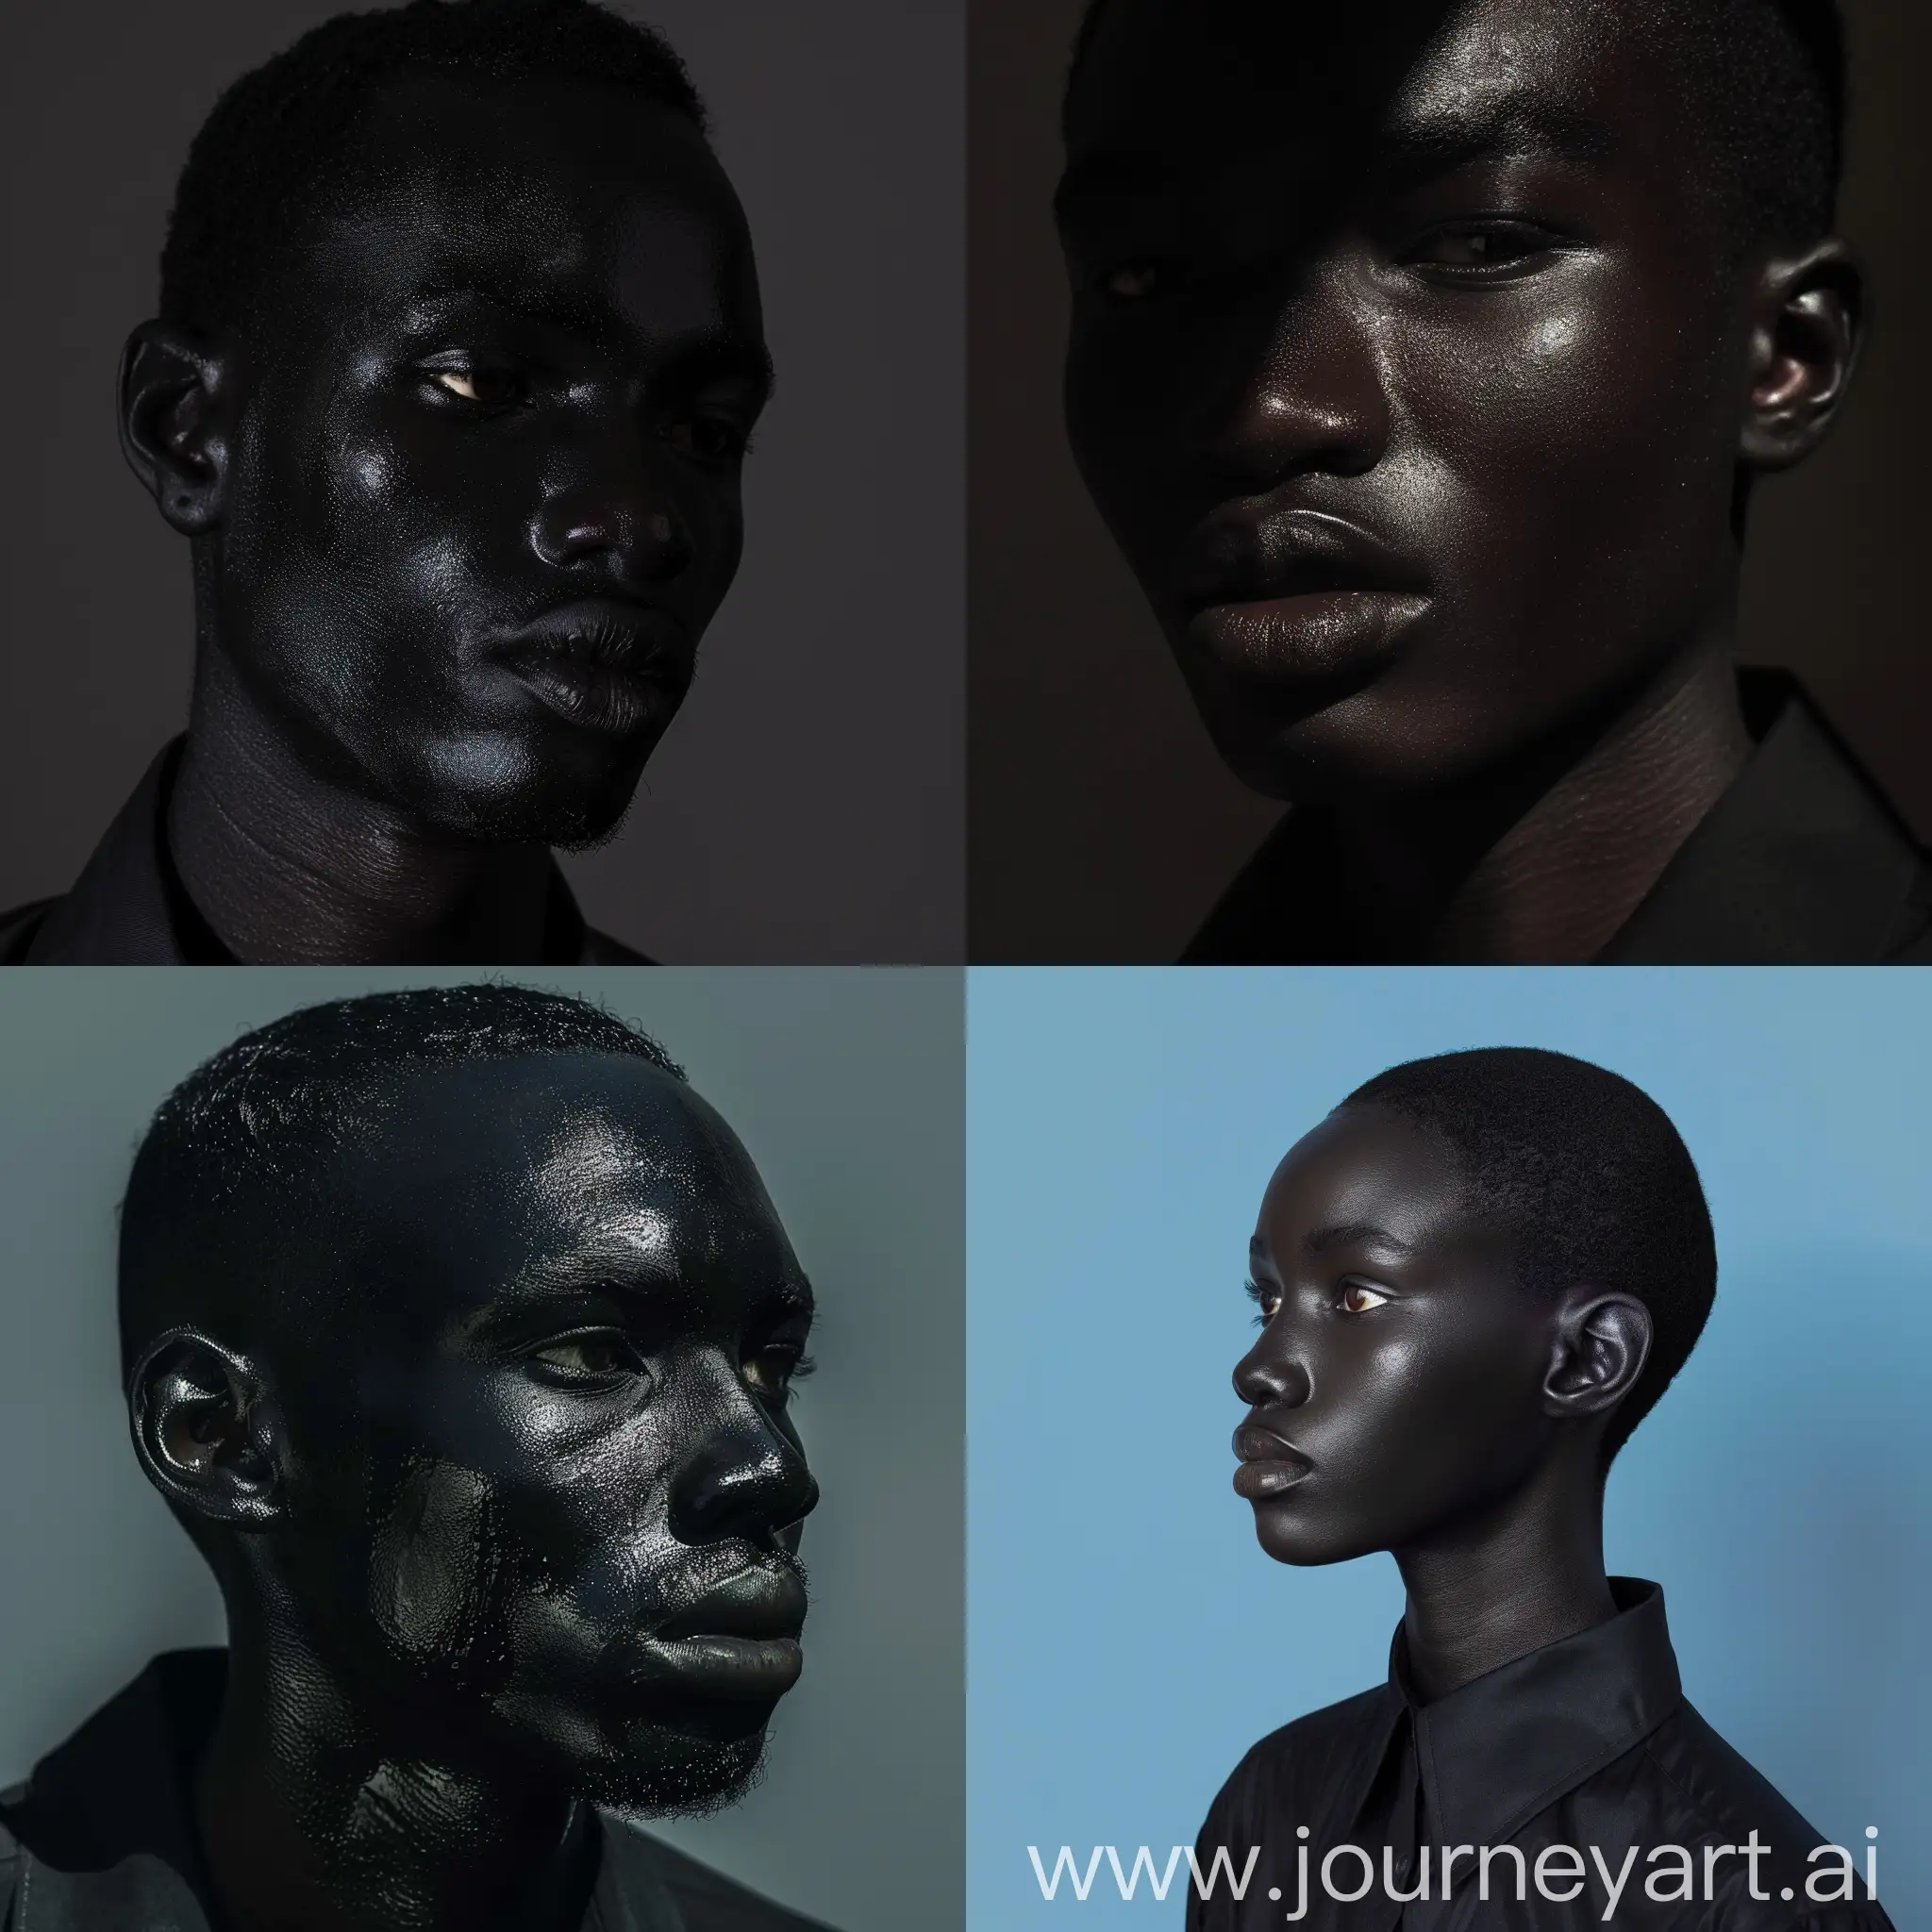 A dark-skinned person